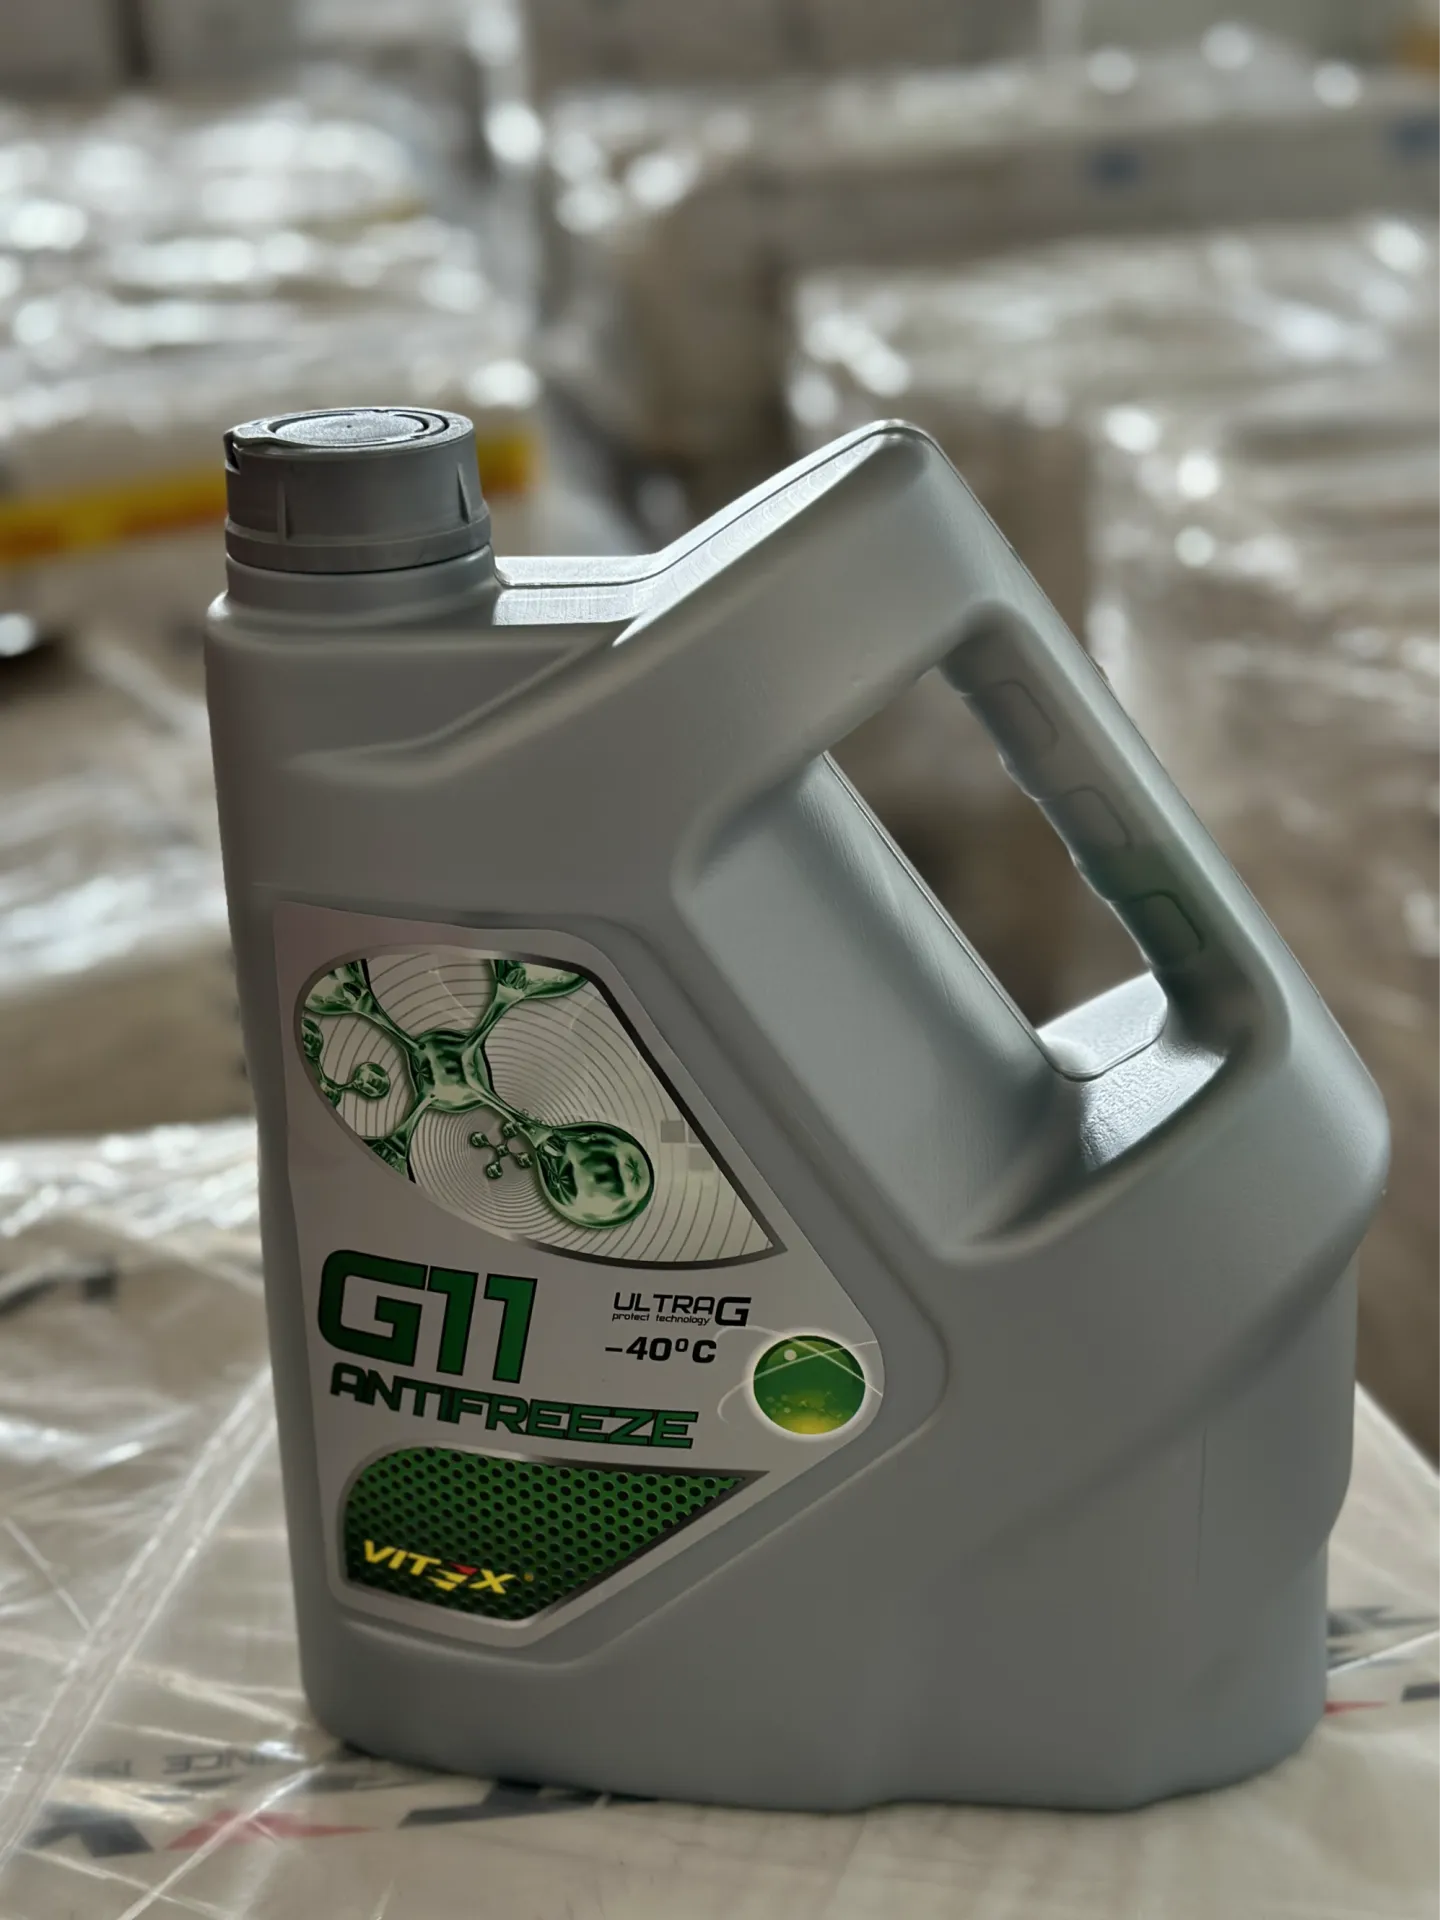 Антифриз Antifreeze «Vitex G11-40 Ultra G» (5 кг.) Цвет: зеленый#1